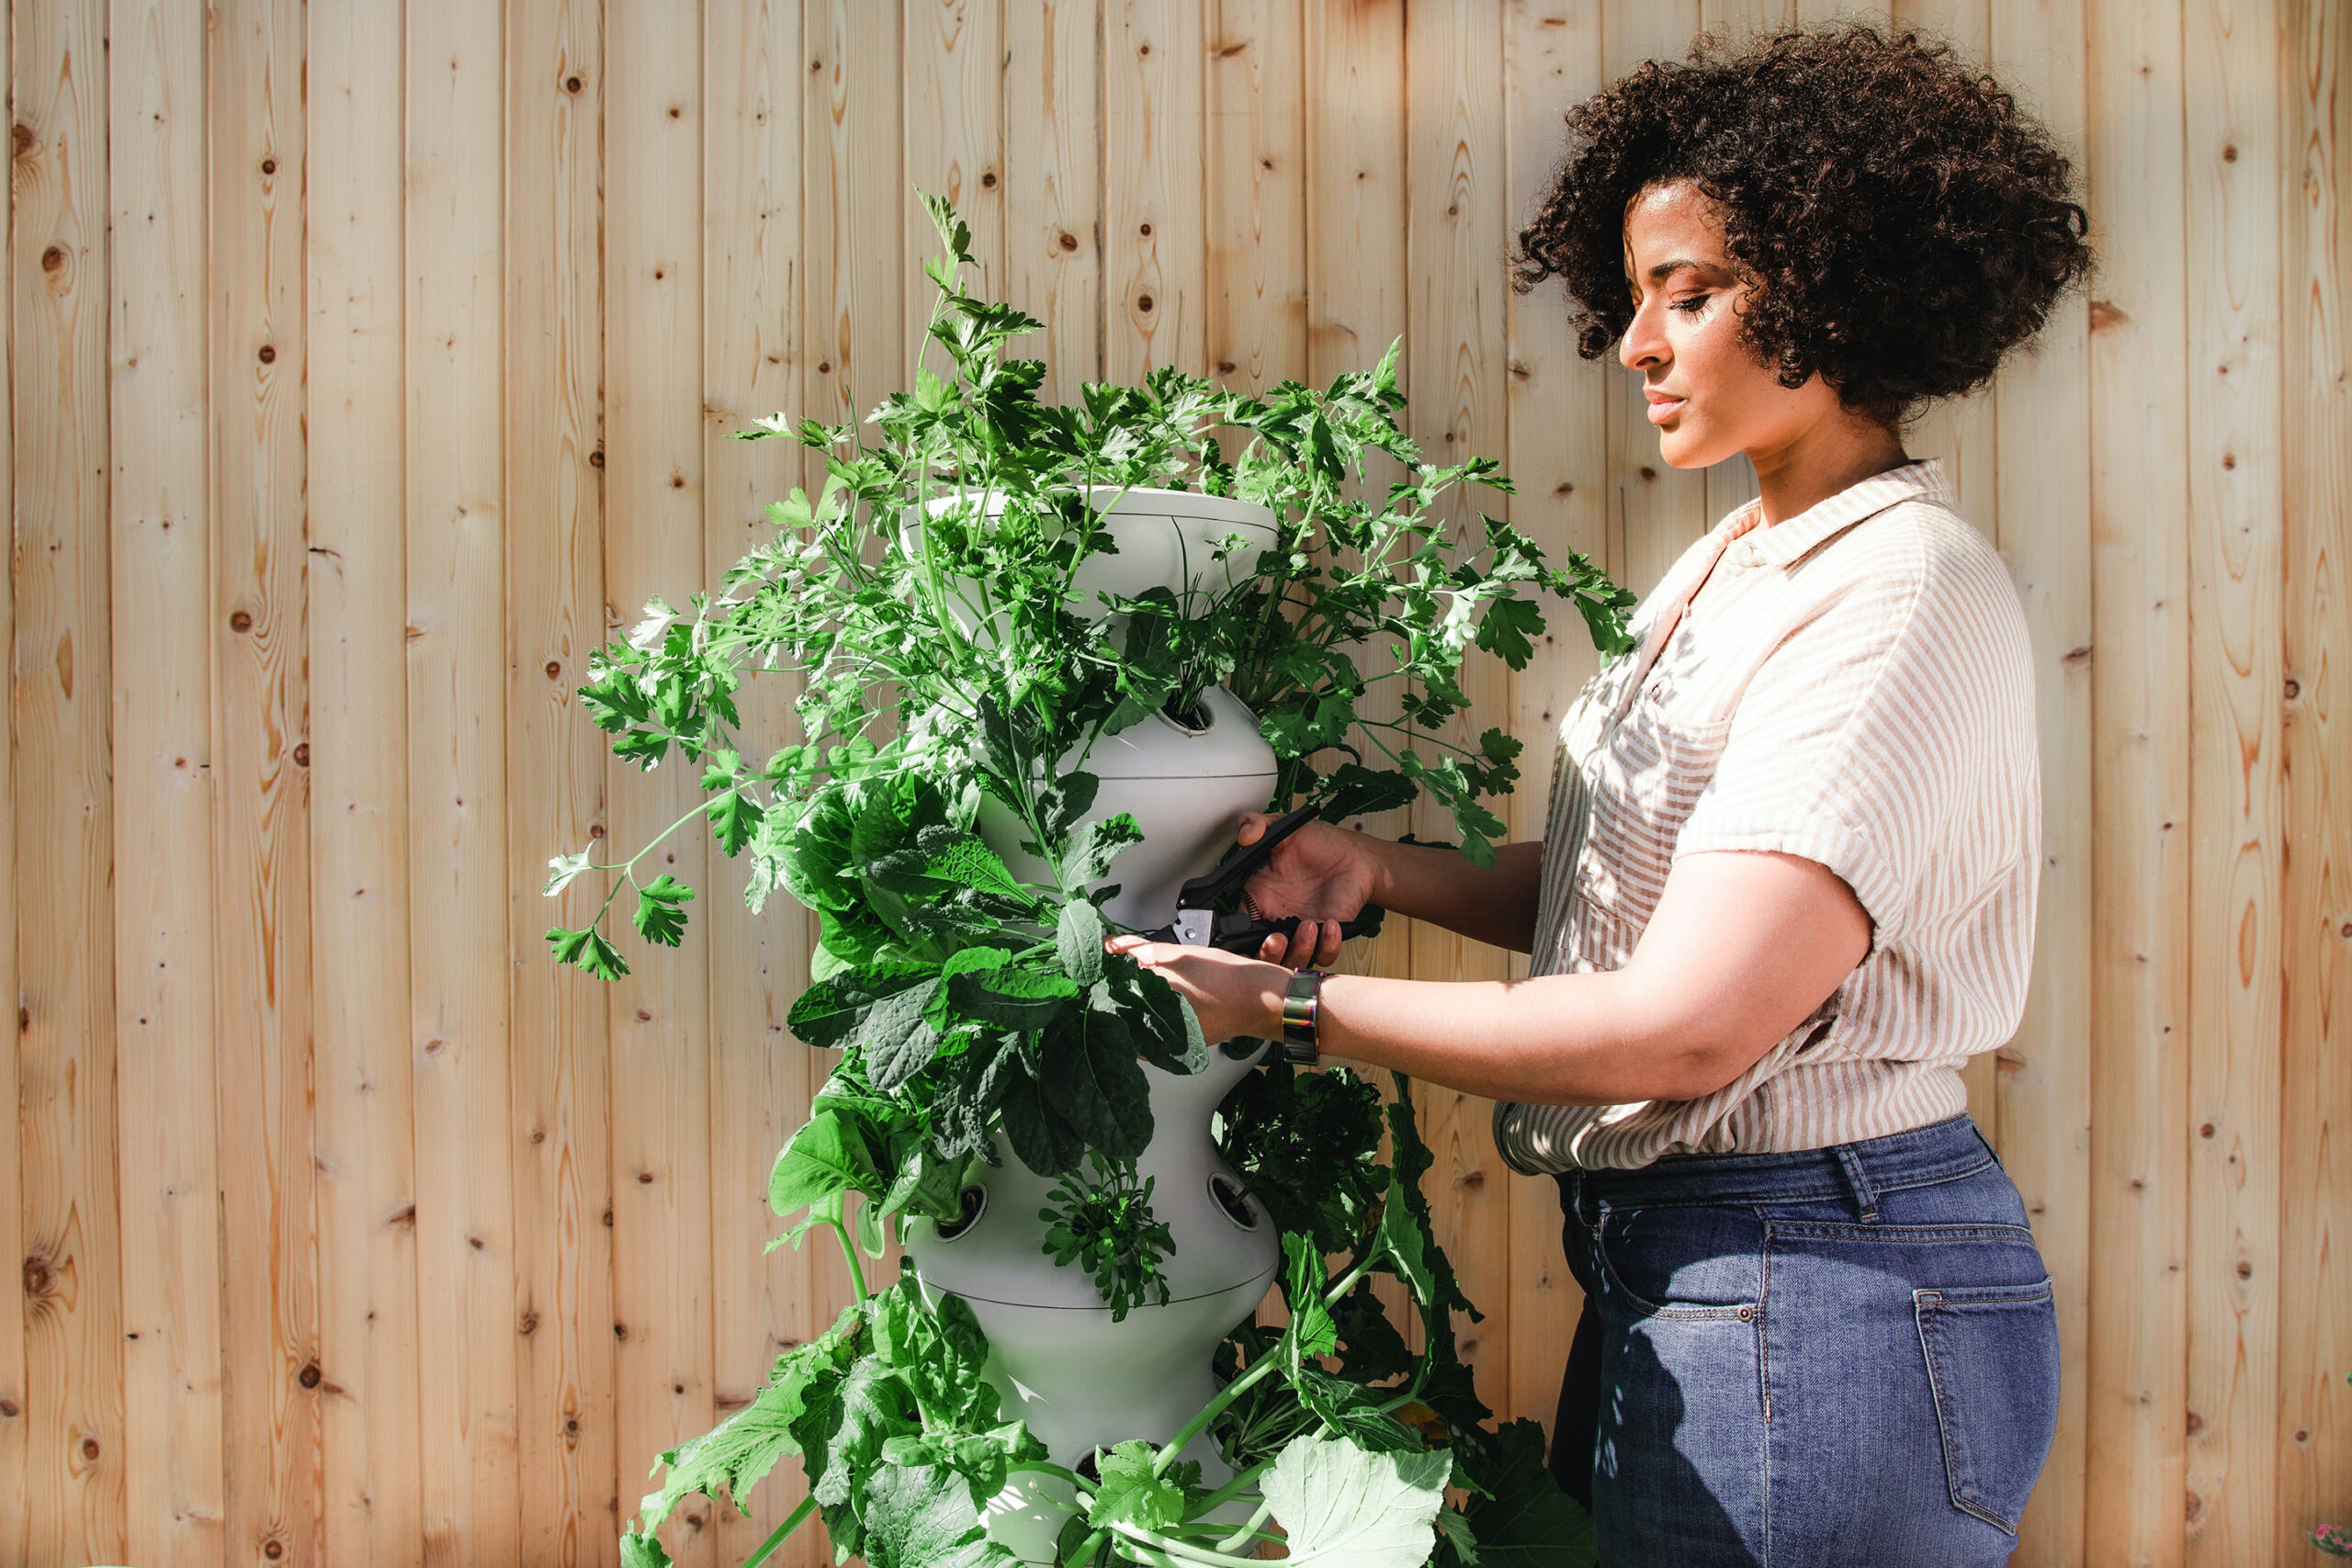 "Plant Moms": Tips for Greening Our Homes Flourish on TikTok